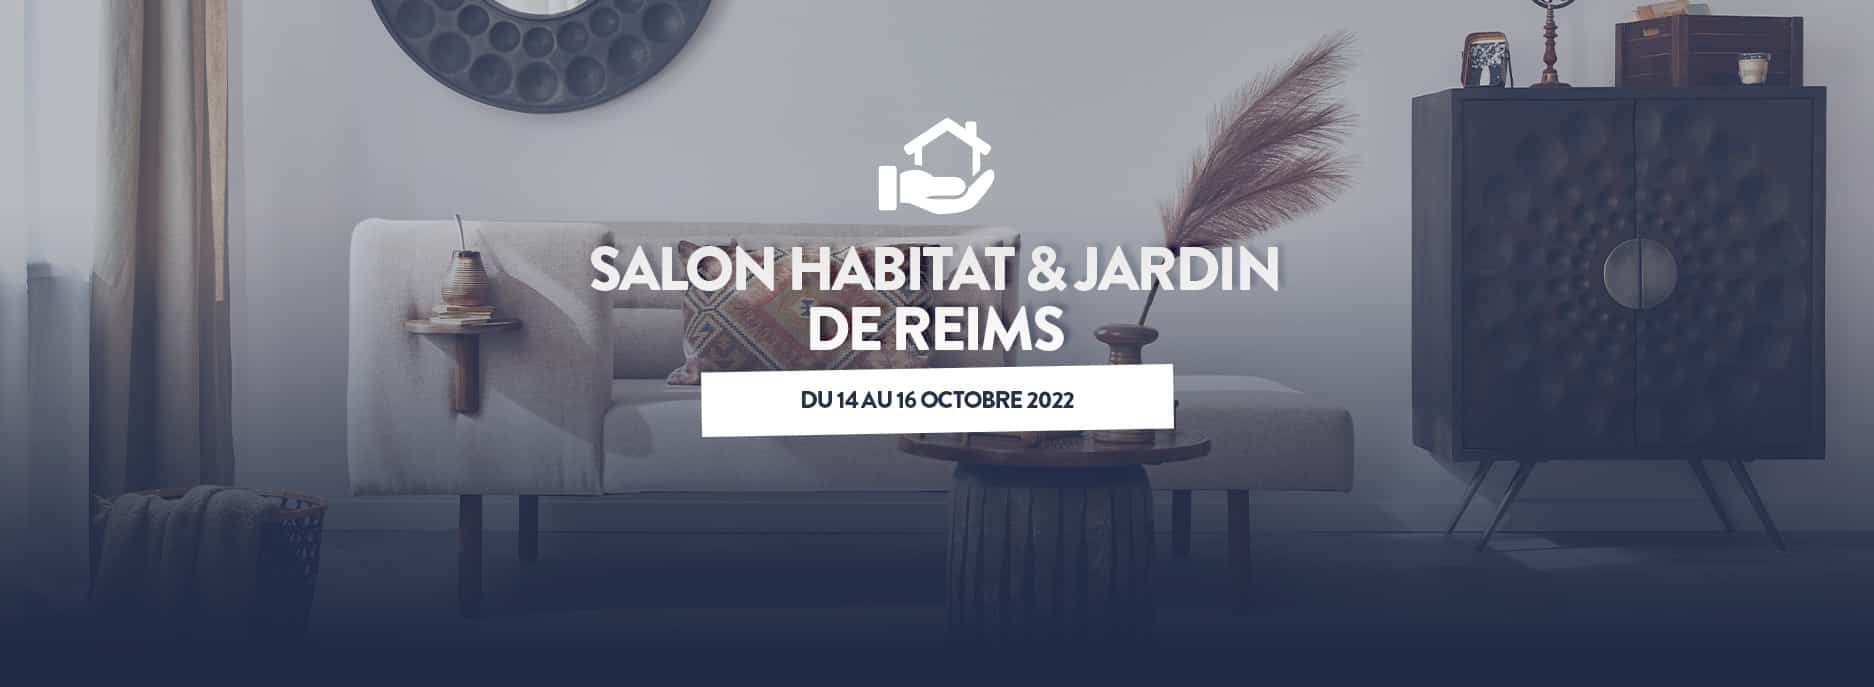 Salon Habitat & Jardin de Reims du 14 au 16 octobre